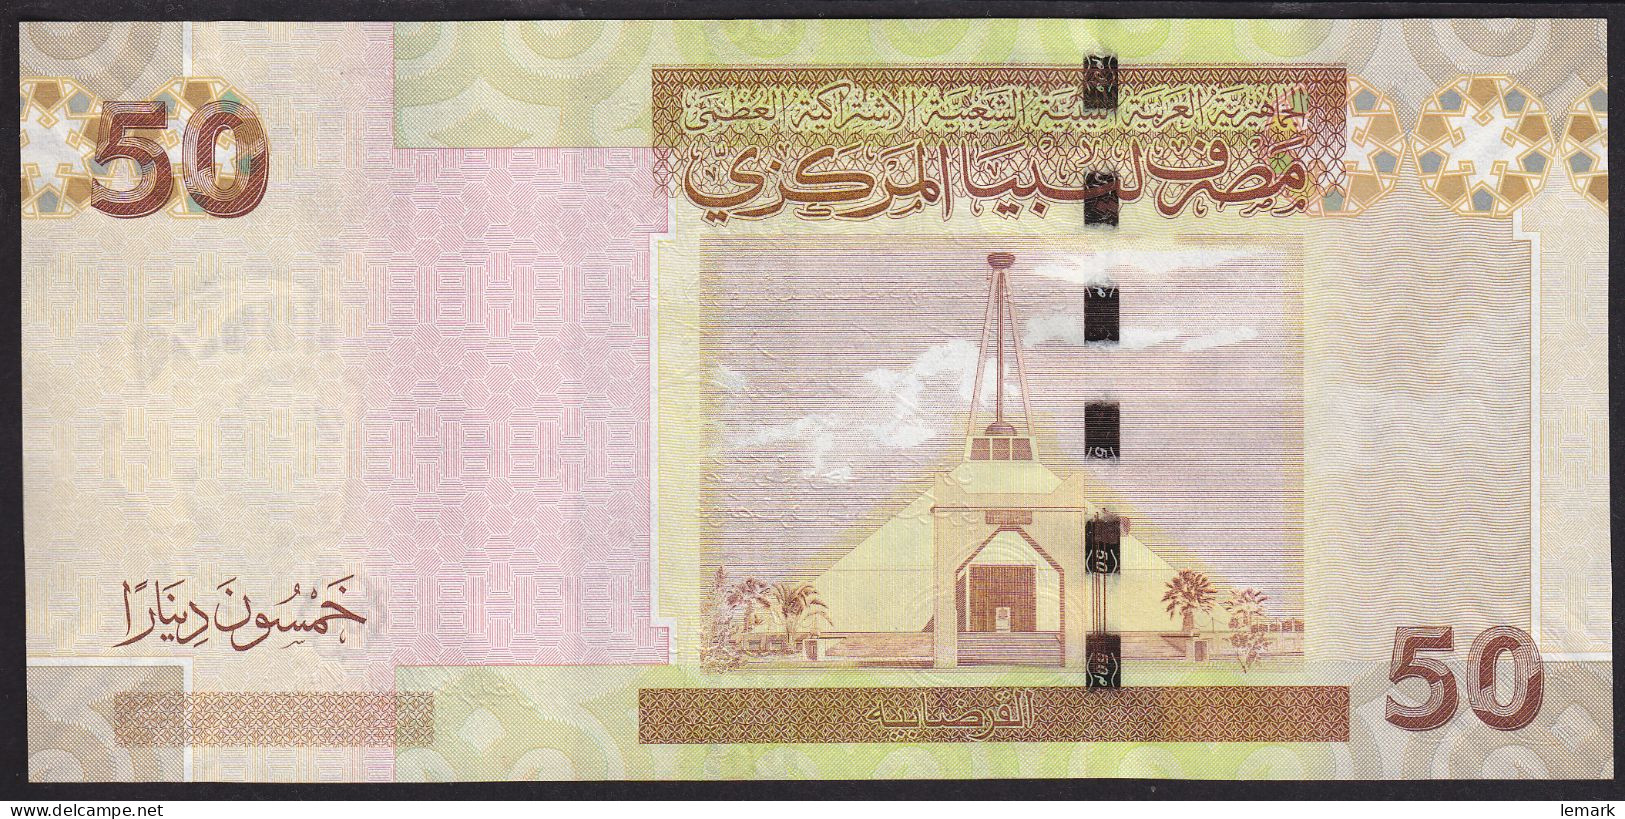 Libya 50 Dinara 2009 P75 UNC - Libyen